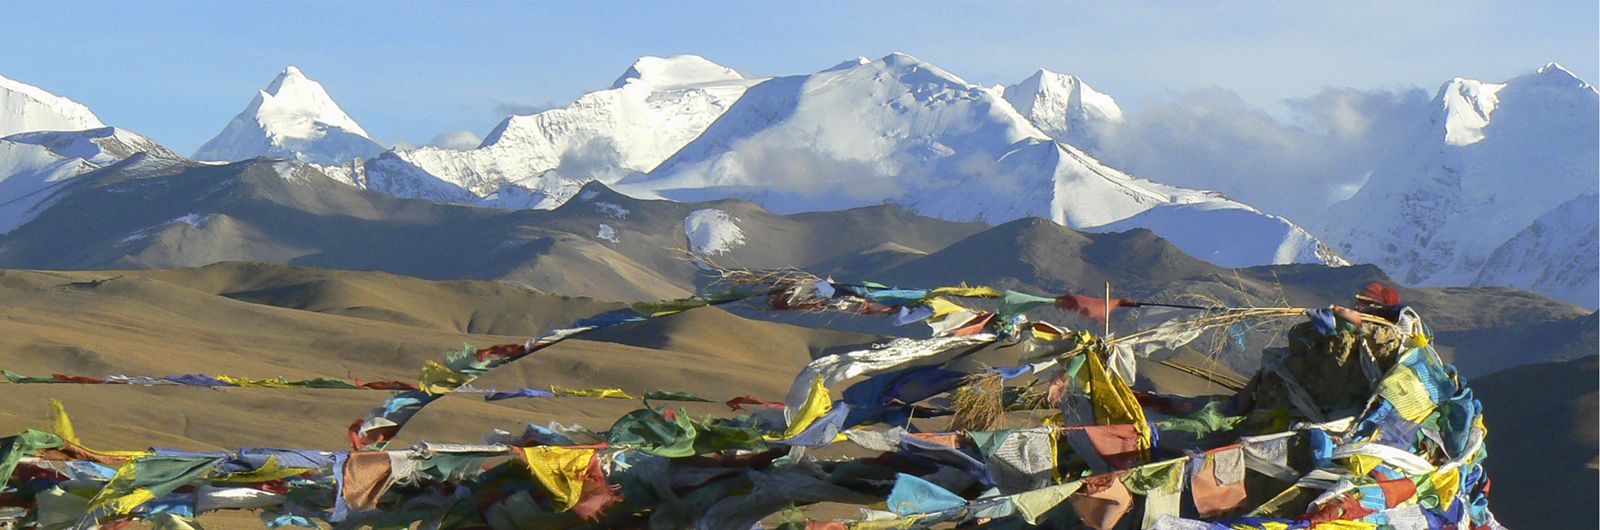 Nepal - Tibet